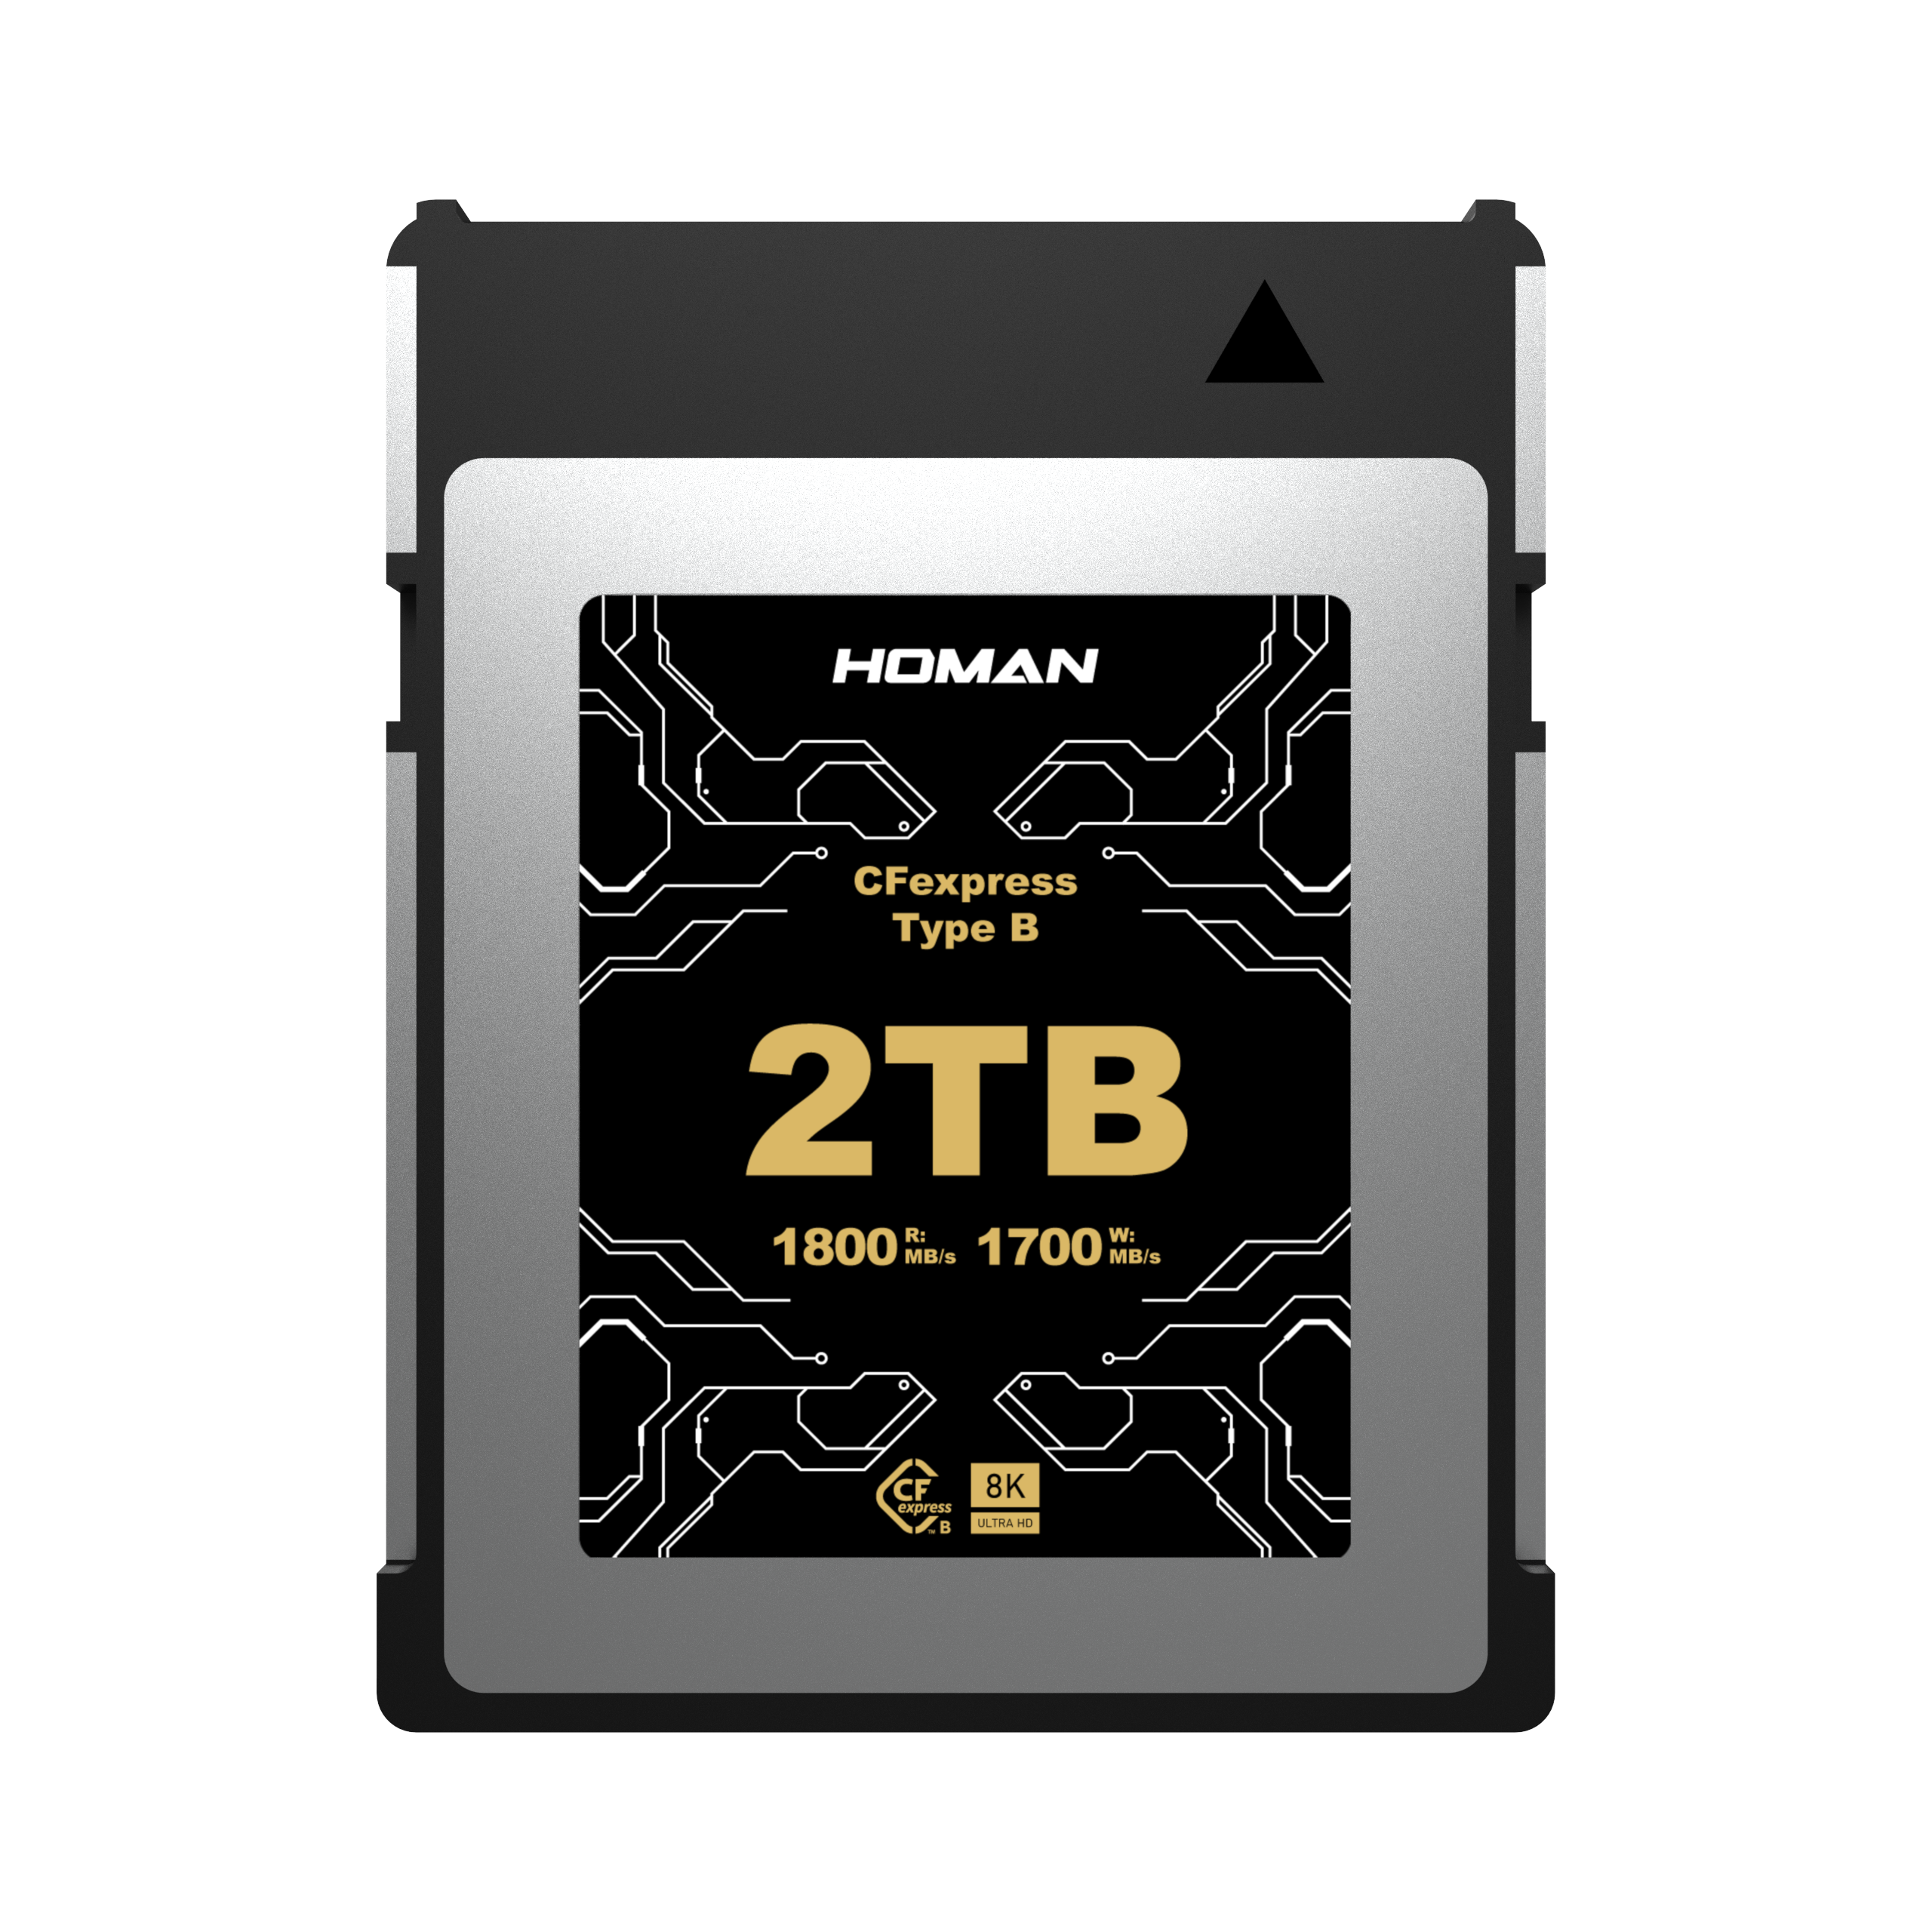 HOMAN CFexpress Card Type B 2TB